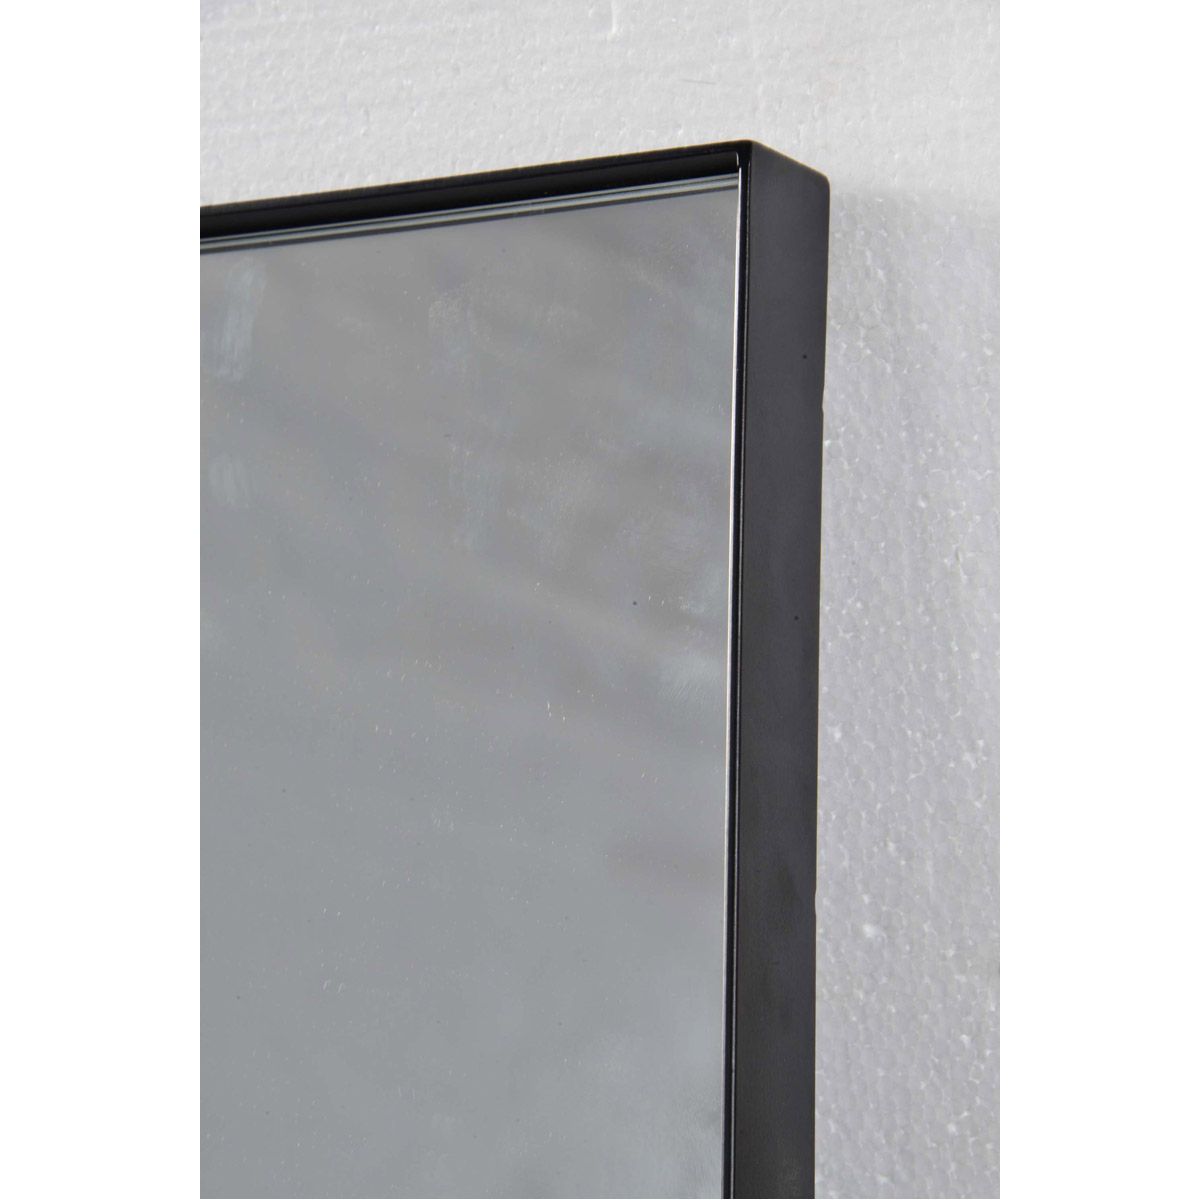 Renwil Mt2097 Greer 36 X 36 Inch Black Wall Mirror, Medium Square | Ebay Inside Matte Black Square Wall Mirrors (View 6 of 15)